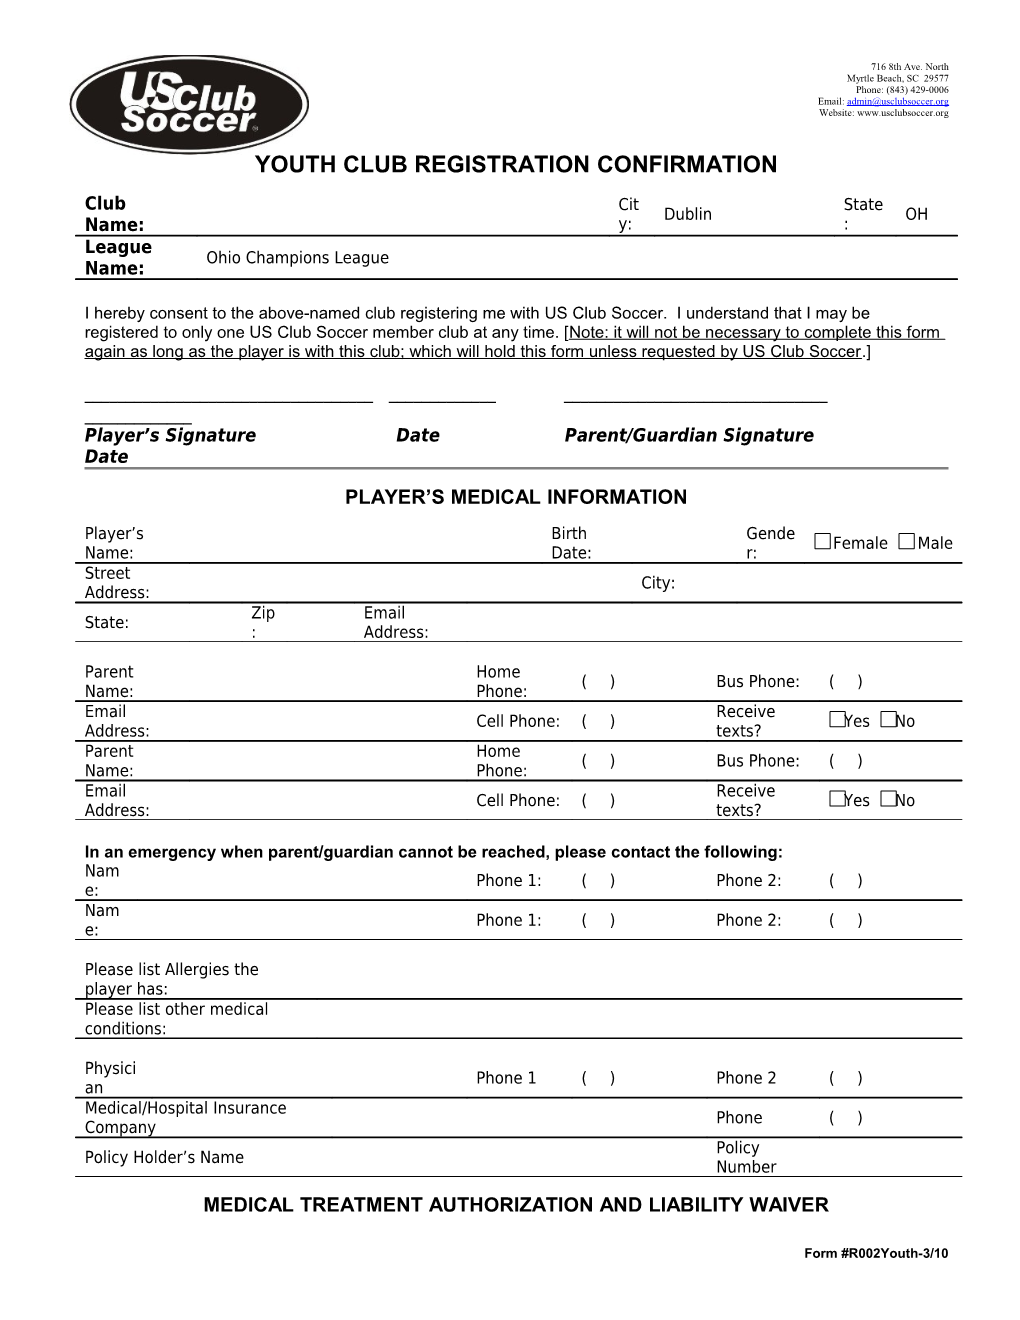 Youth Club Registration Confirmation s1